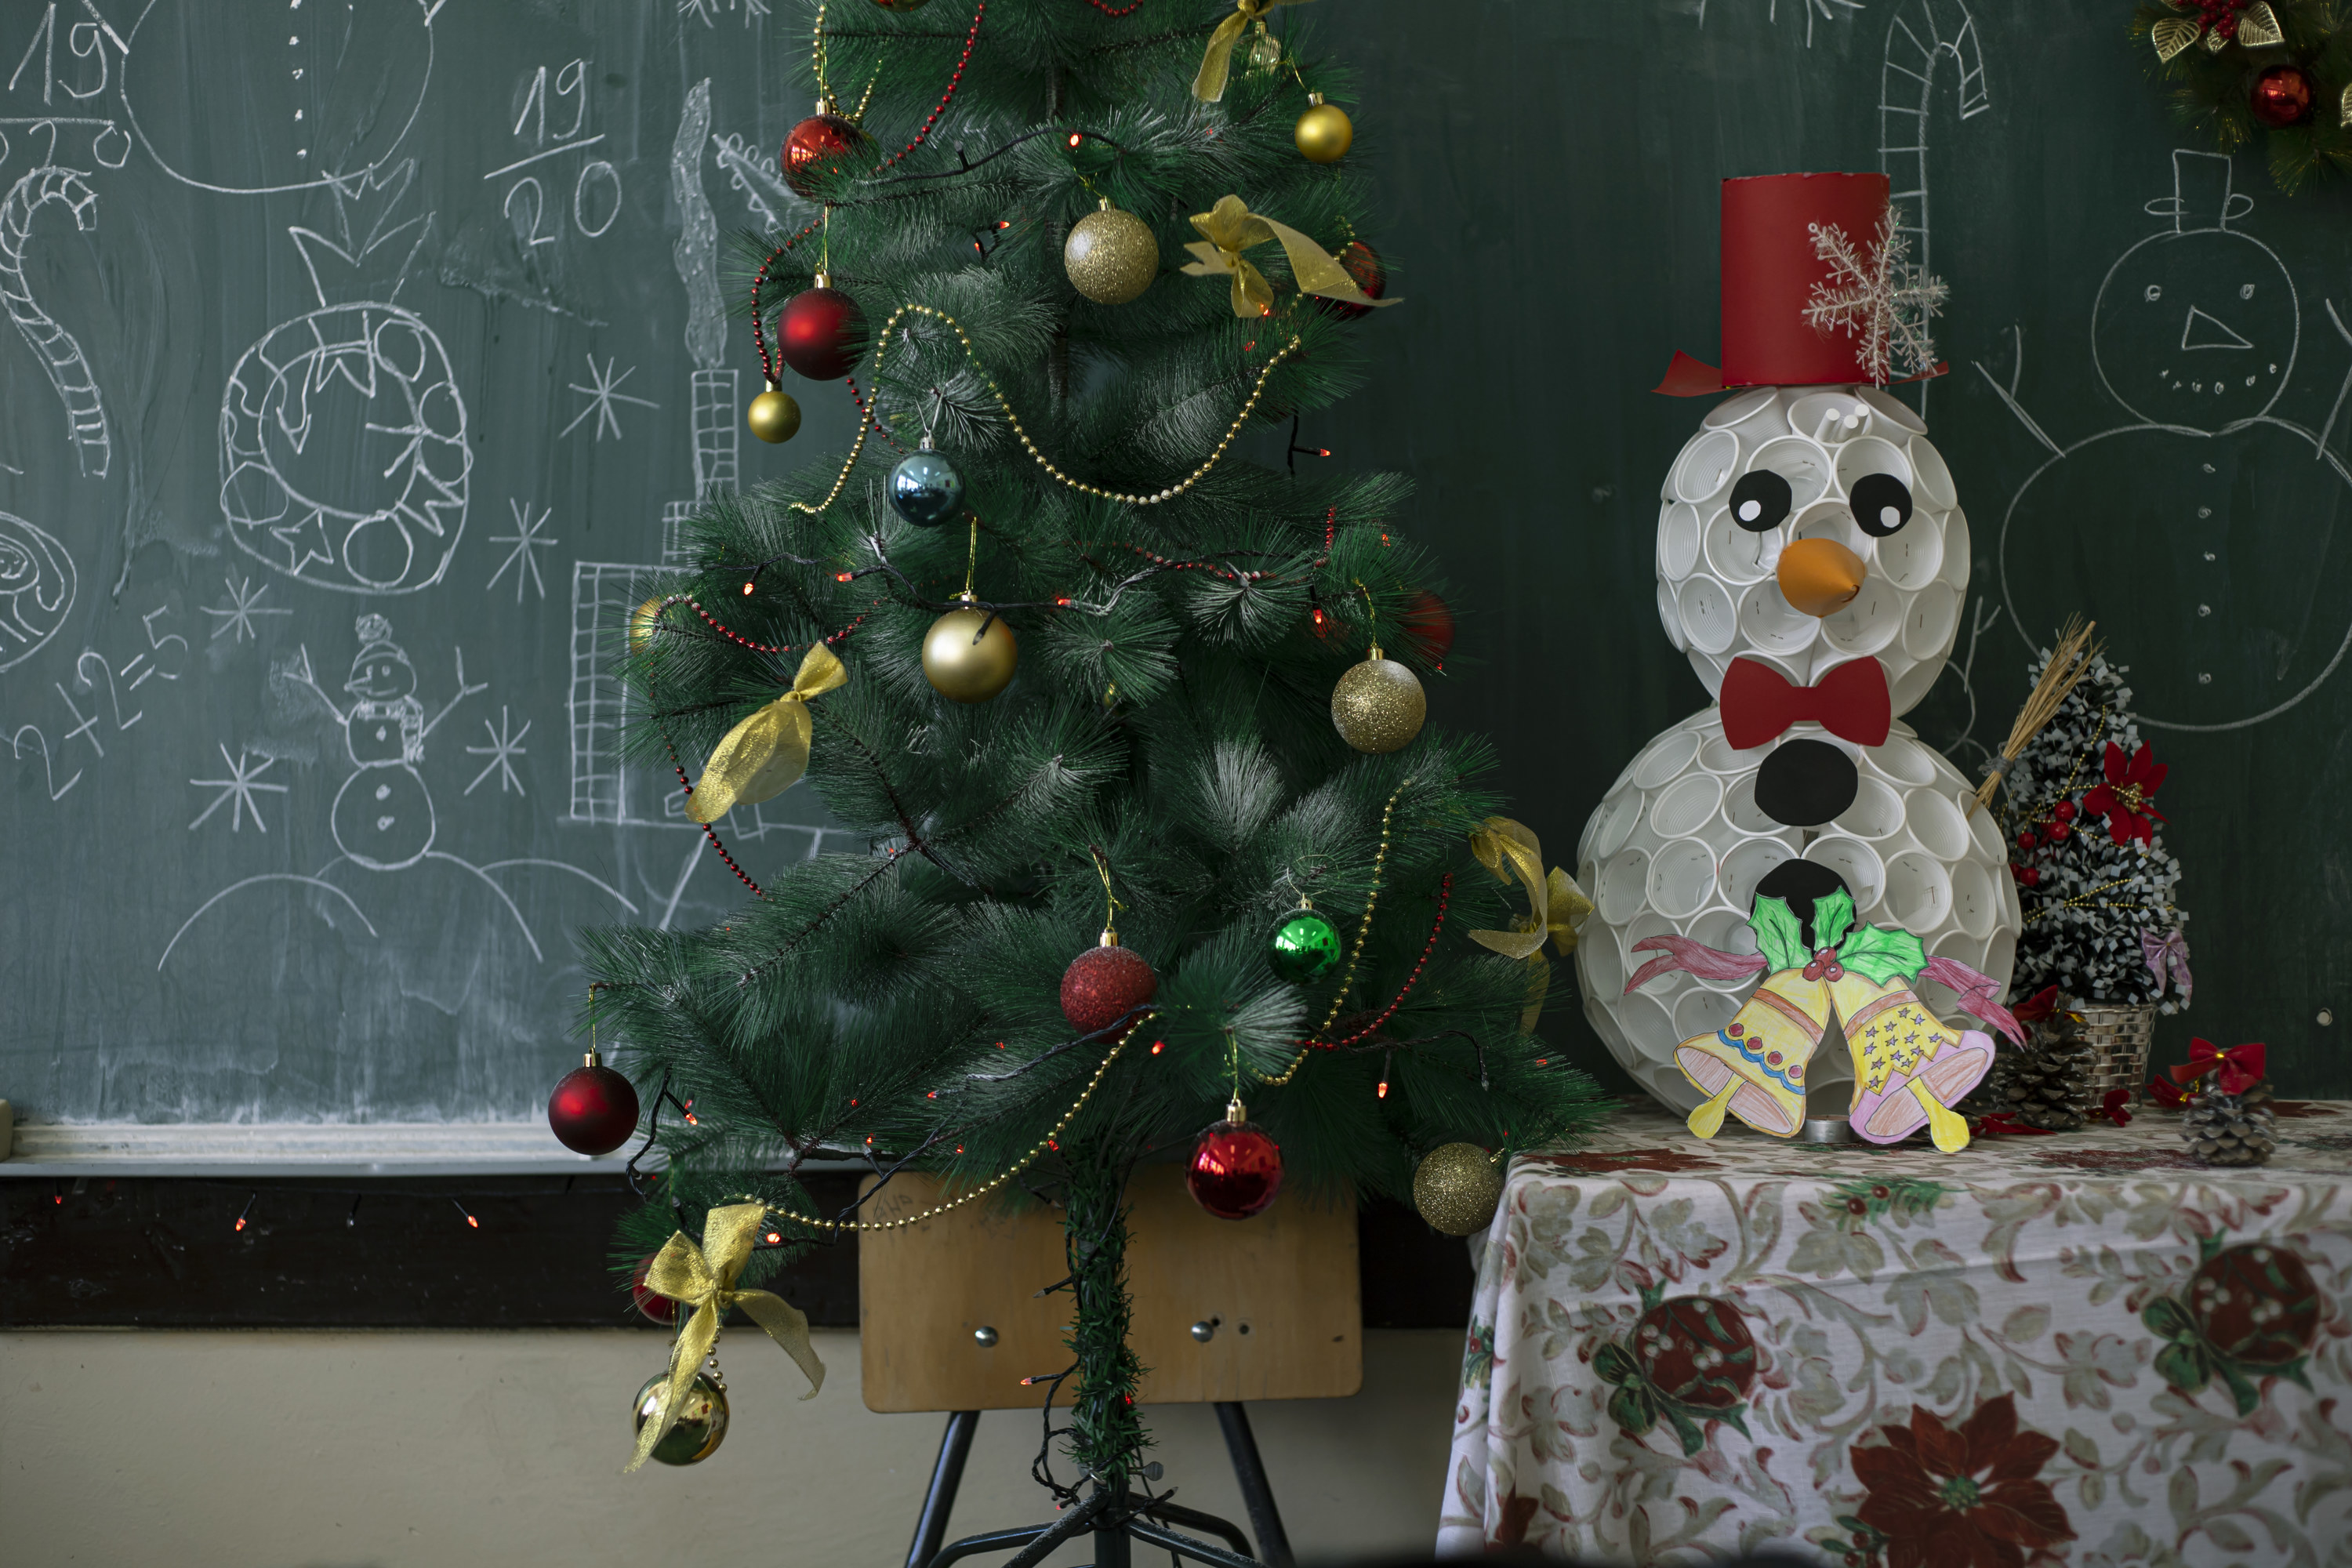 school classroom with Christmas decor